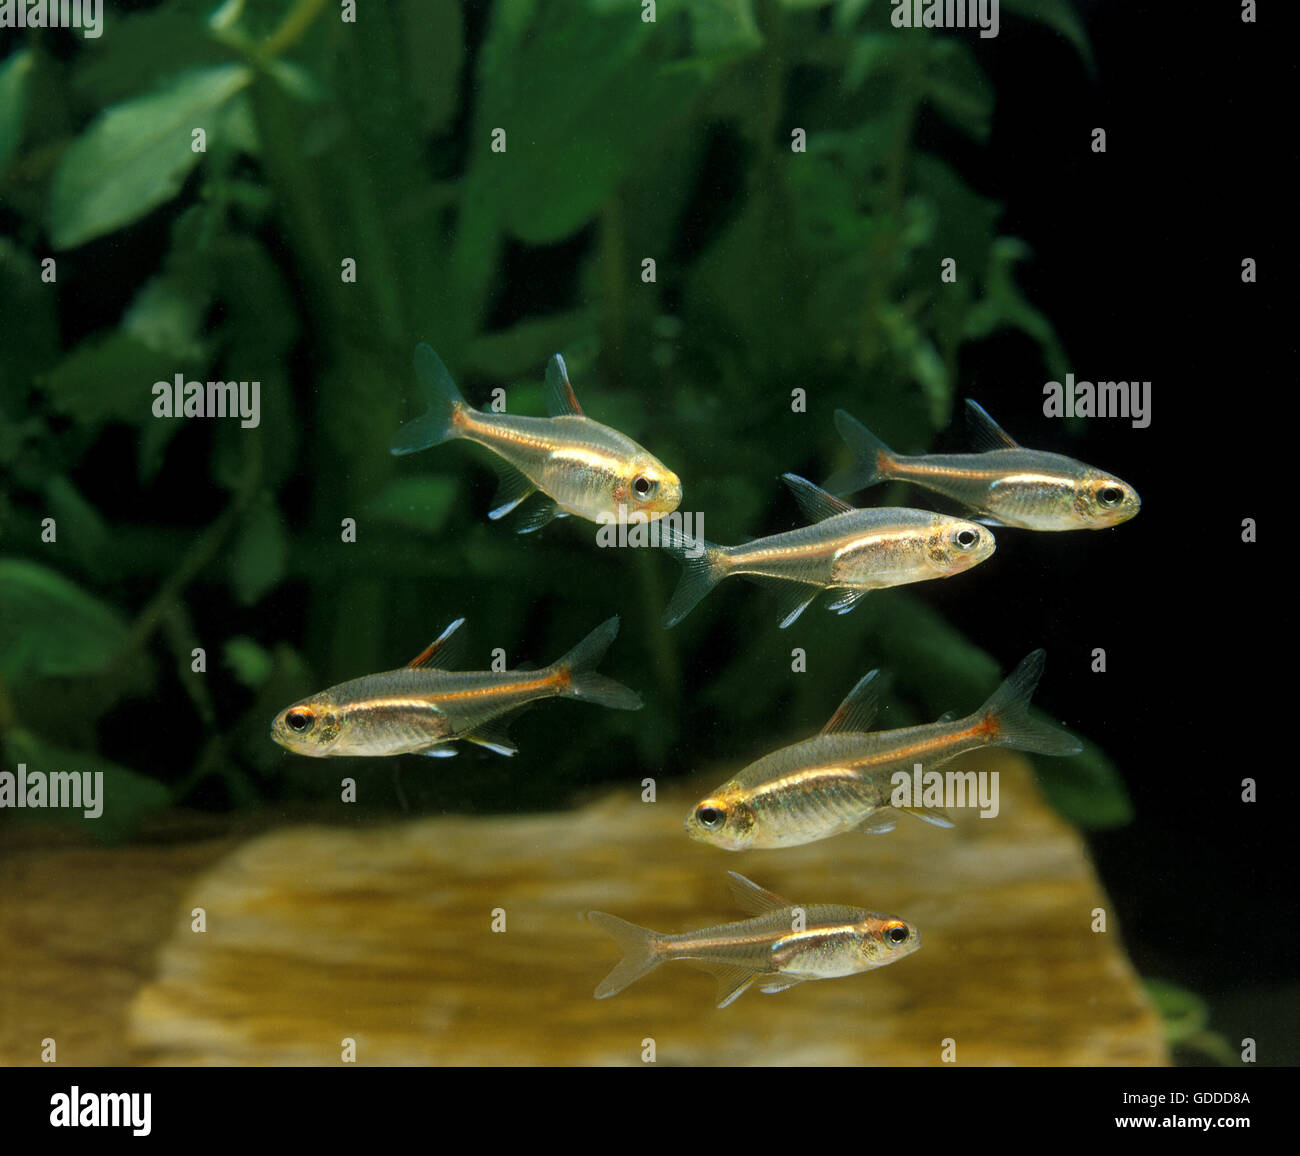 Glow Light Tetra, hemigrammus gracilis, Aquarium Fishes Stock Photo